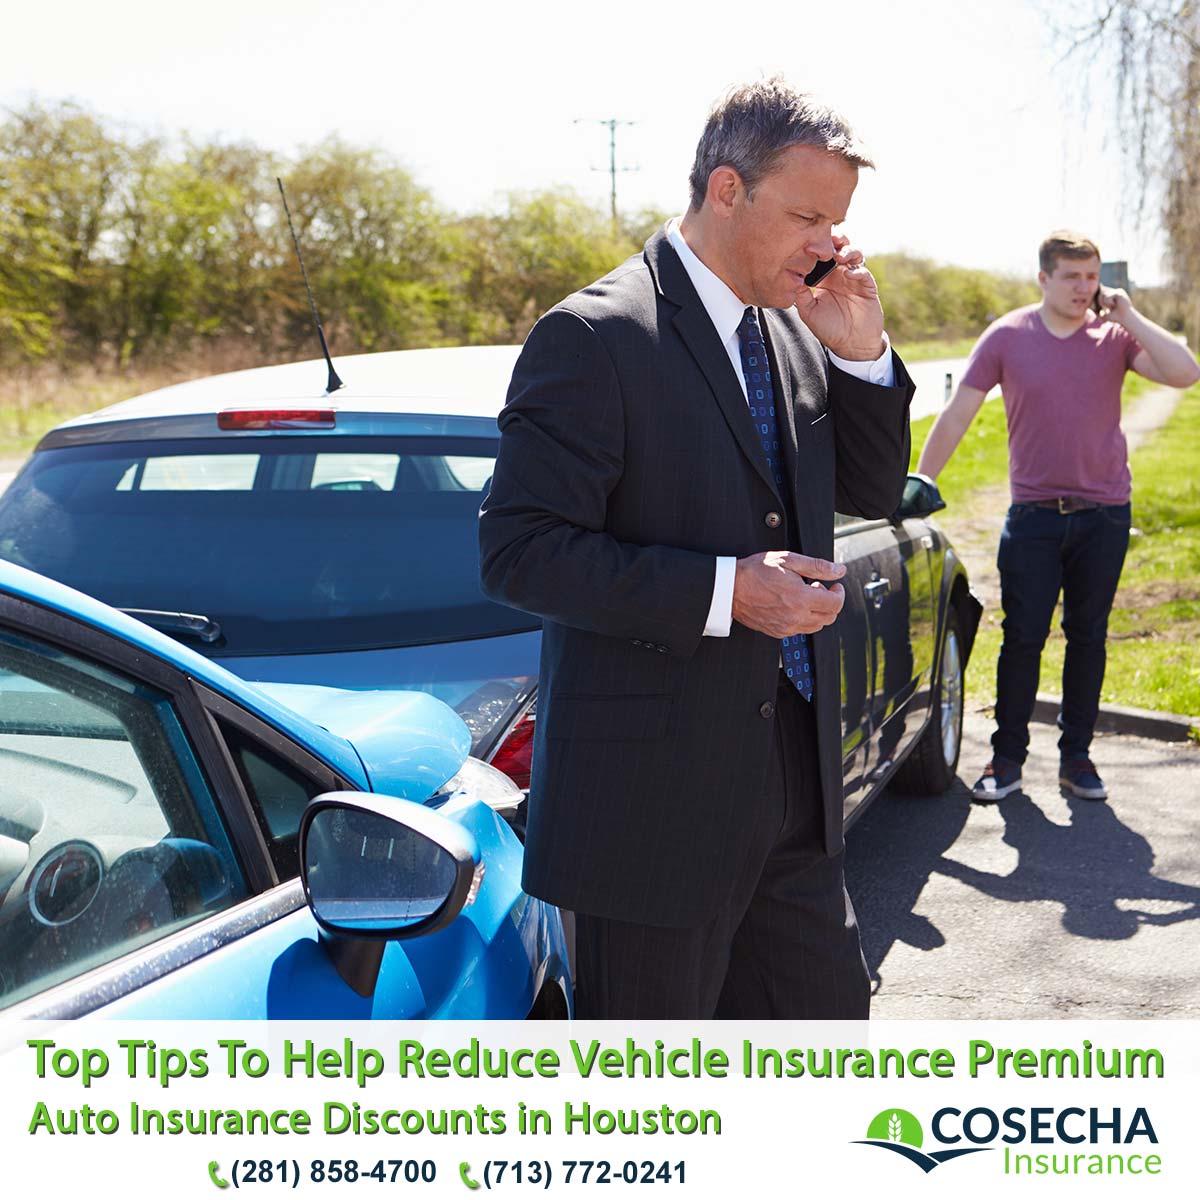 29 Top Tips To Help Reduce Vehicle Insurance Premium